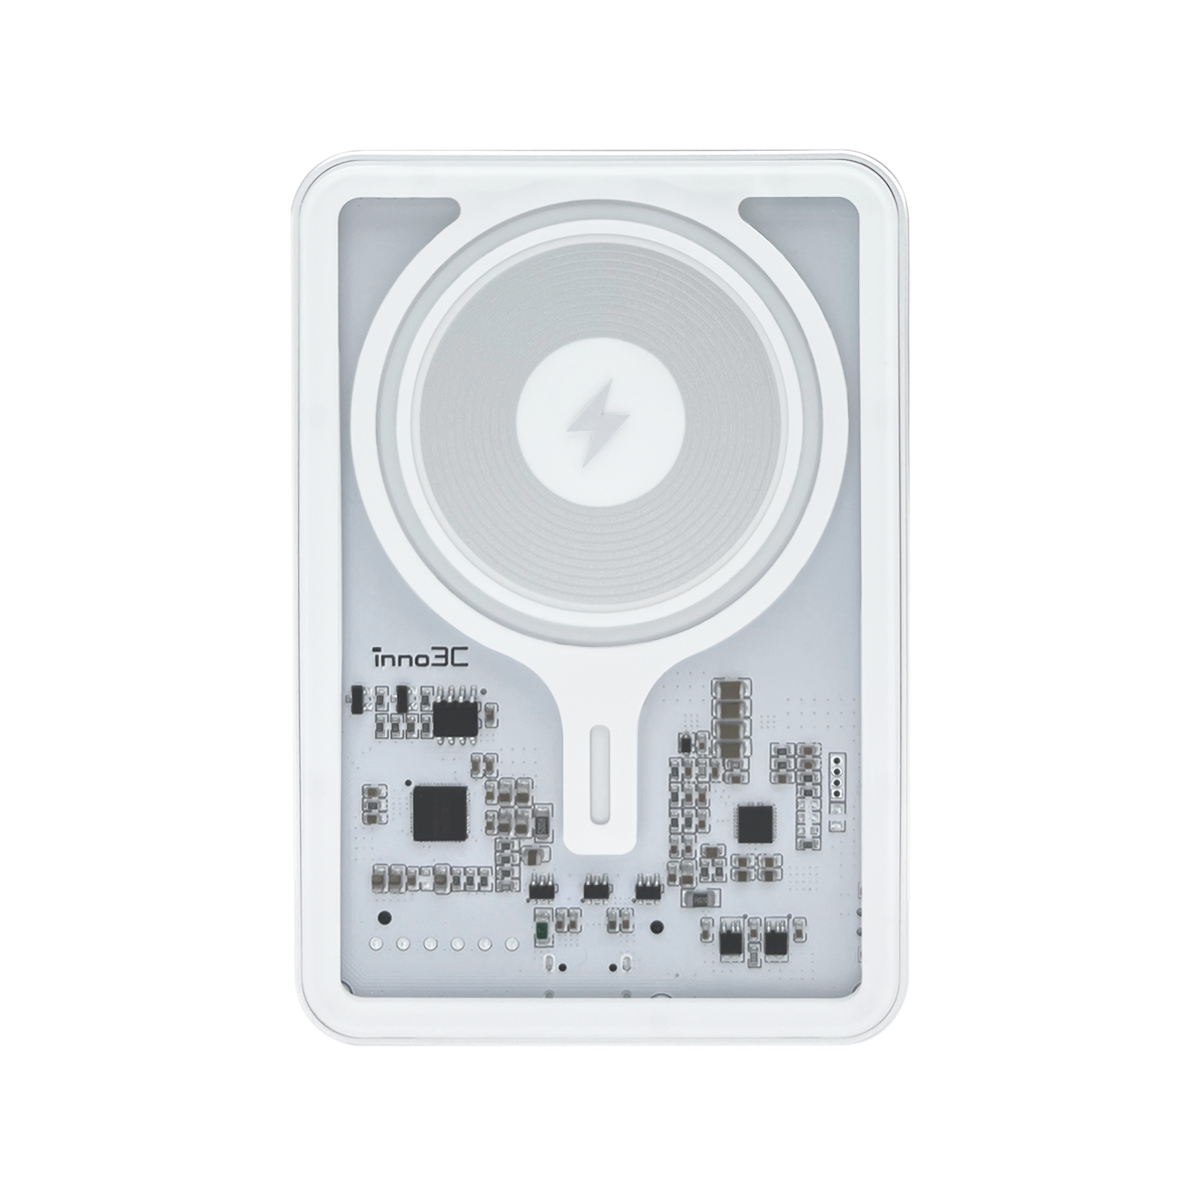 inno3C i-MT10 Wireless Powerbank with Flashing Light (Transparent White)